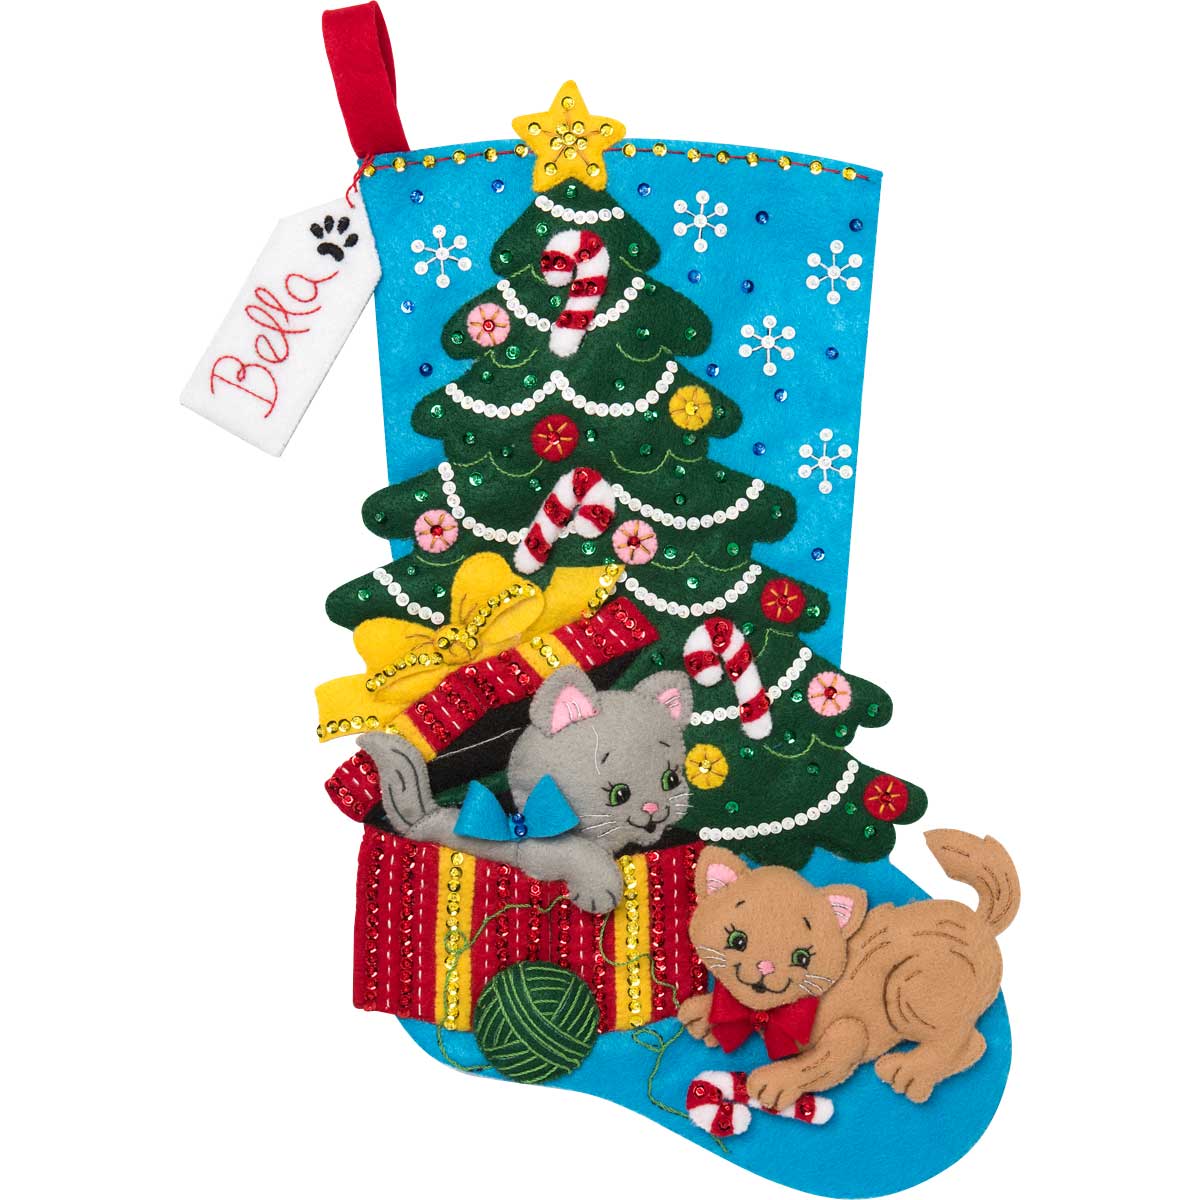 Shop Plaid Bucilla ® Seasonal Felt Stocking Kits The Pawfect Gift